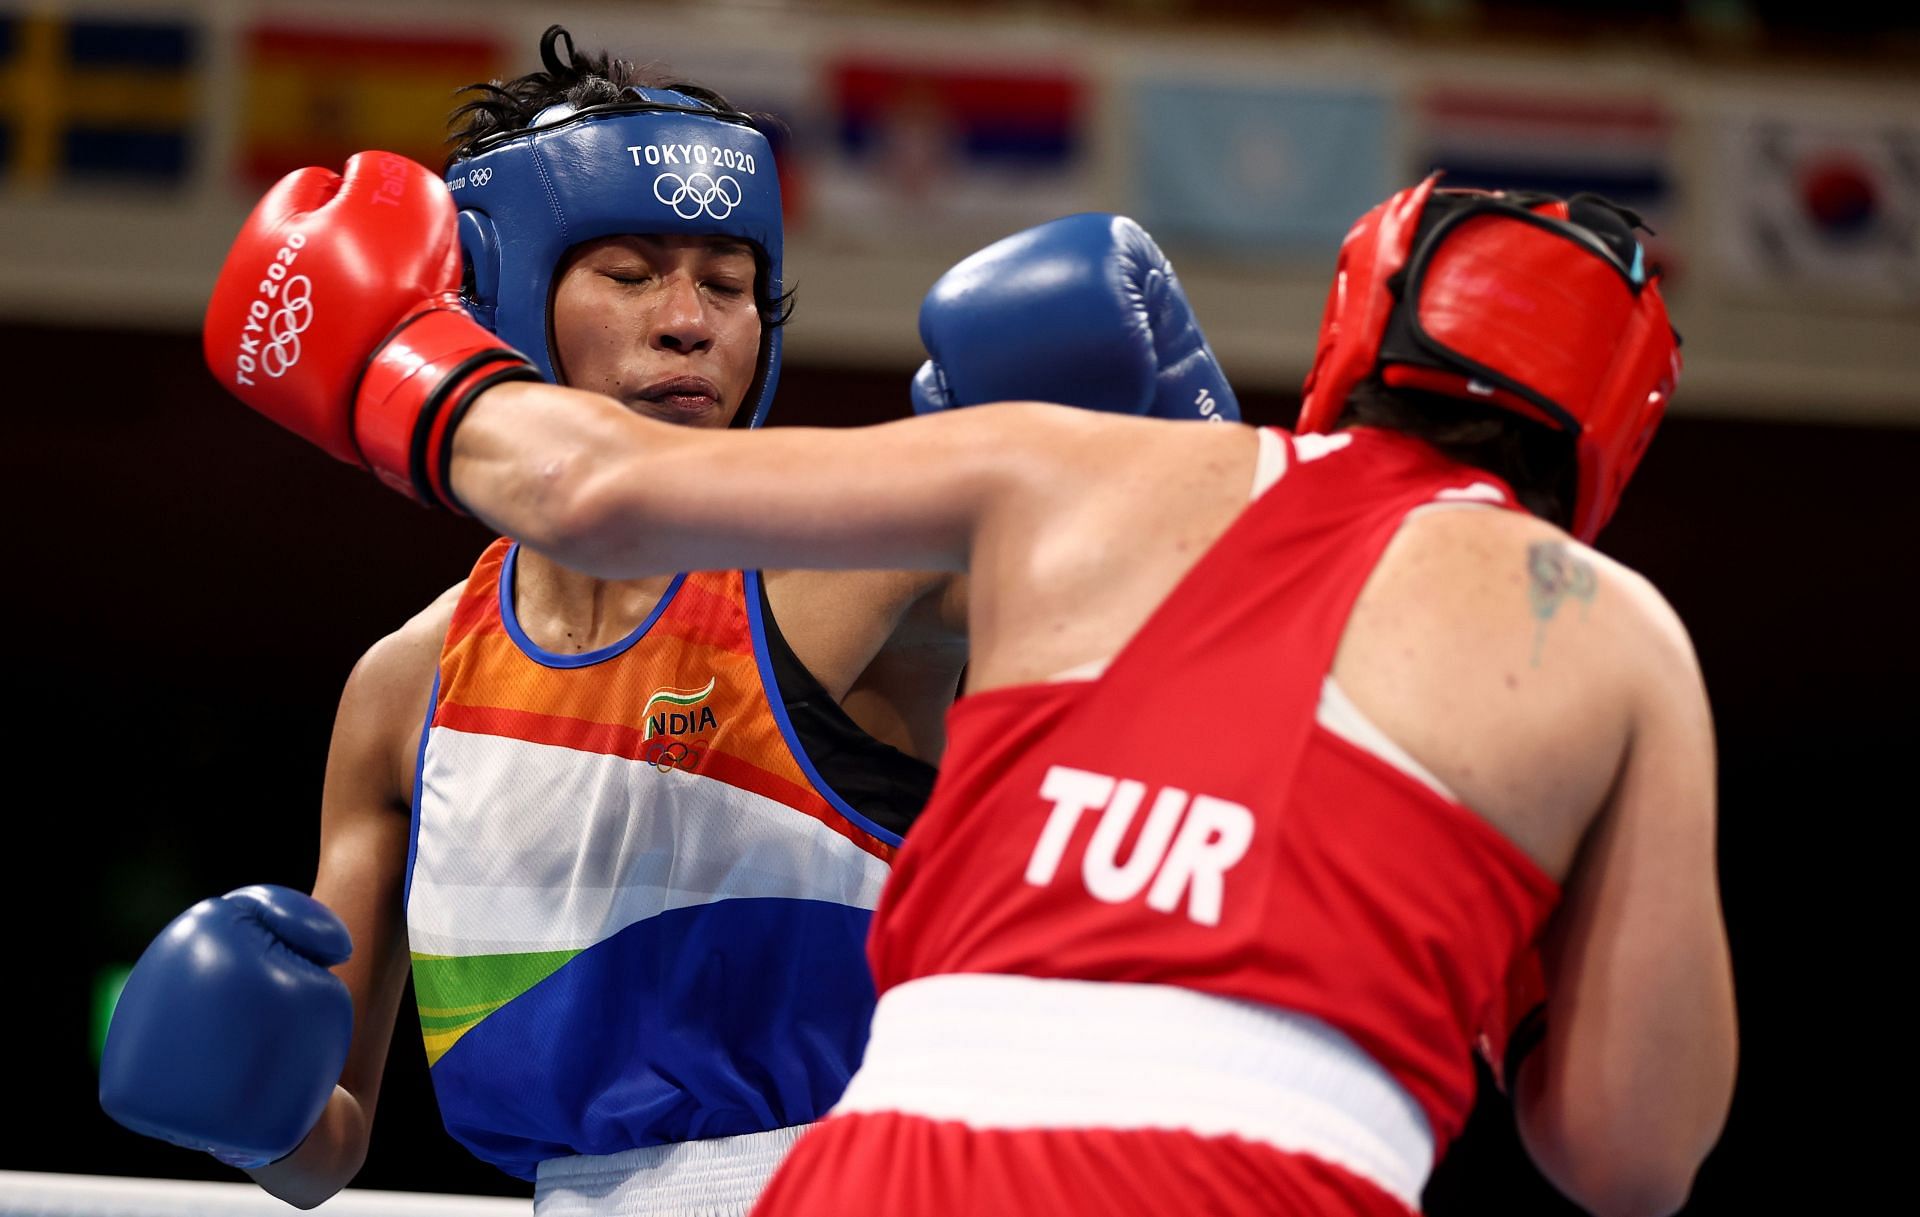 Lovlina Borgohain (in blue) in action at the Tokyo Olympics